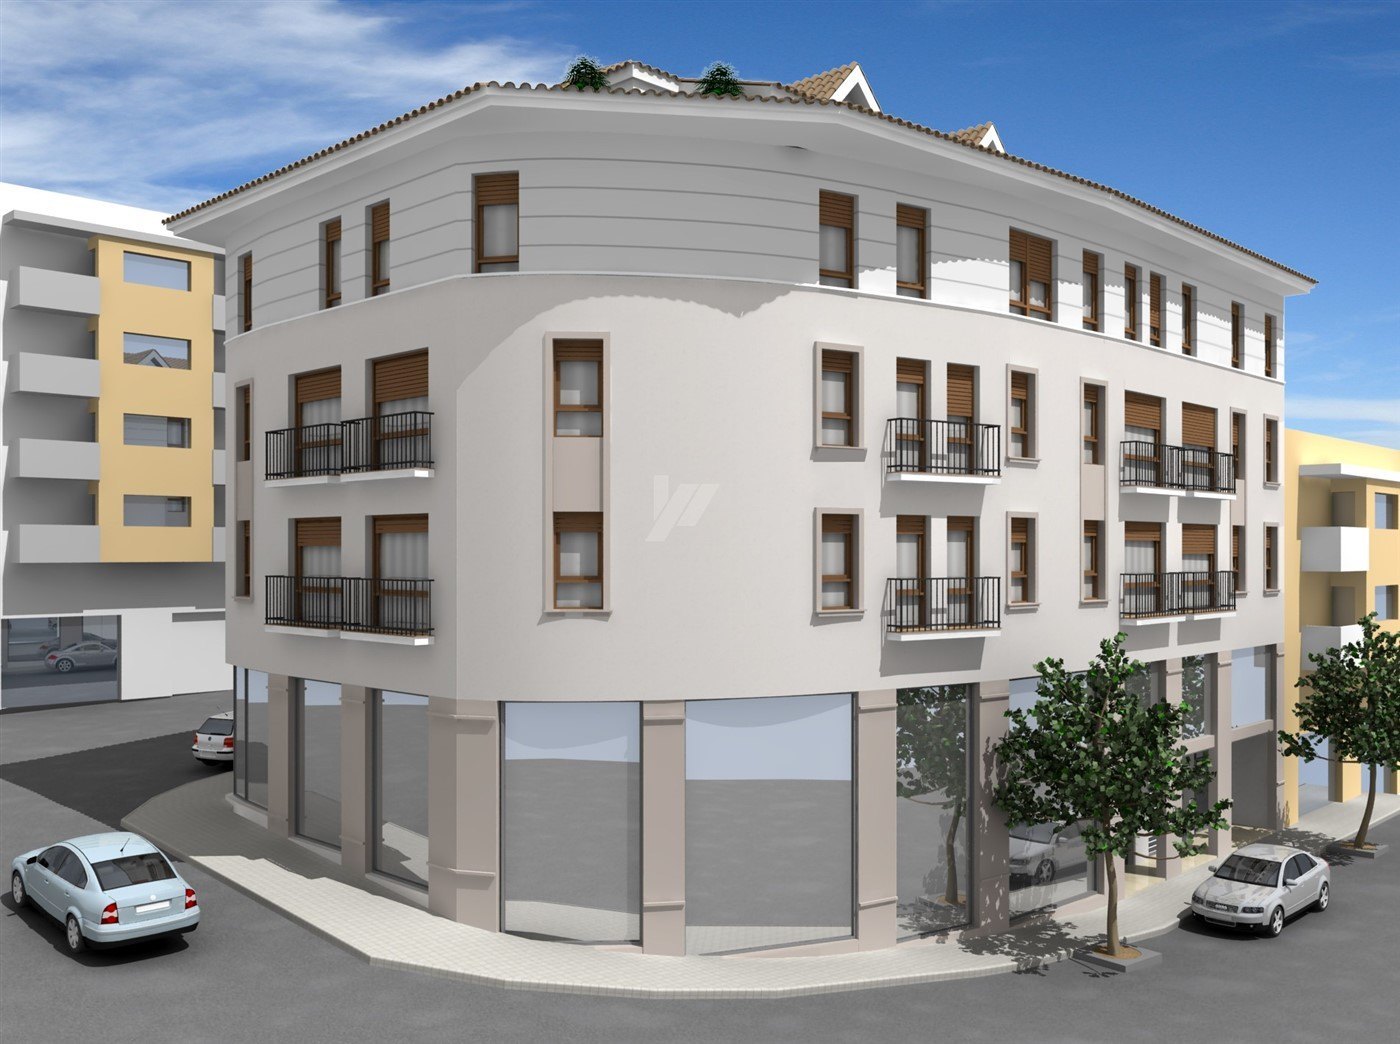 New build apartment for sale in Moraira, Costa Blanca.